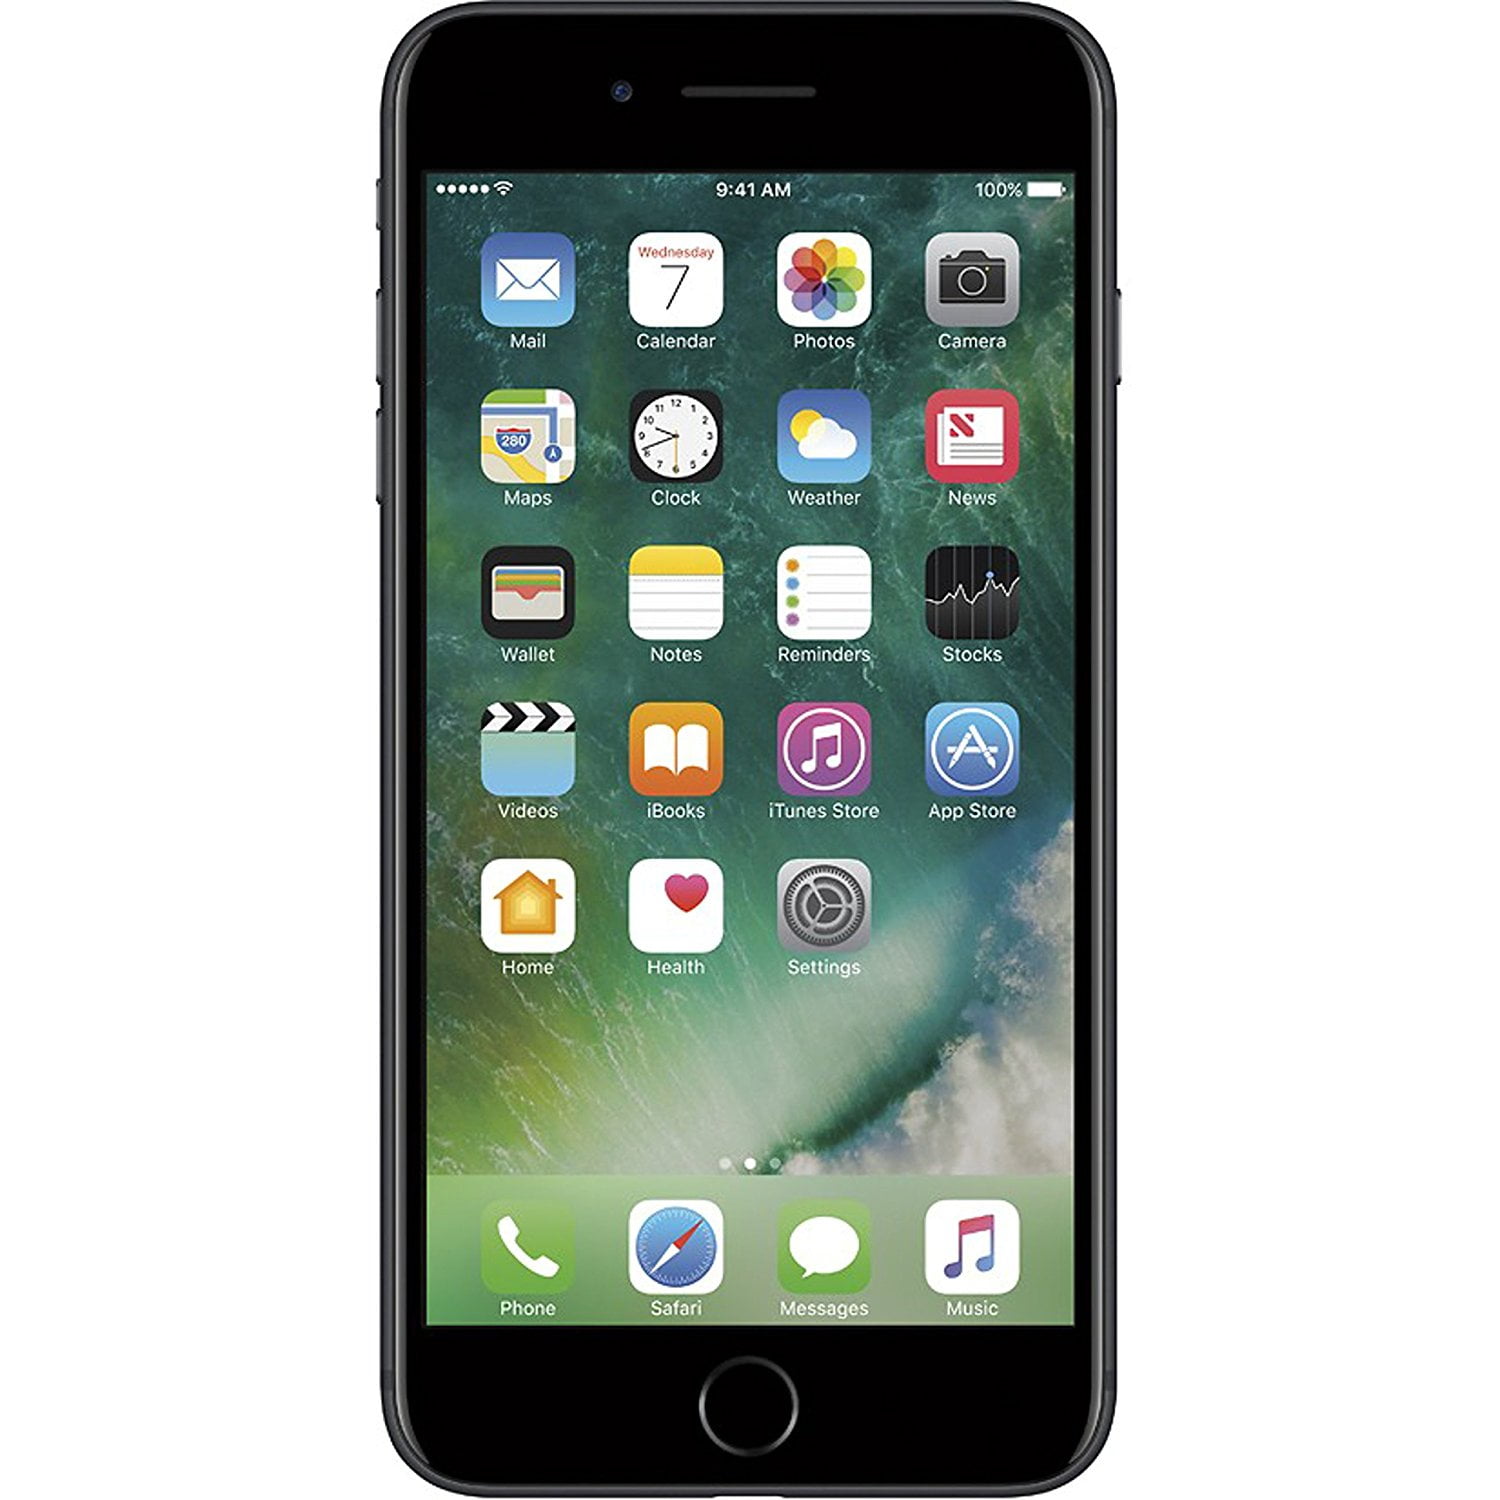 sukker Bevægelig forræder Restored Apple iPhone 7 Plus - GSM UNLOCKED (256GB) 4.7" HD - IOS 10 -  Black (Refurbished) - Walmart.com